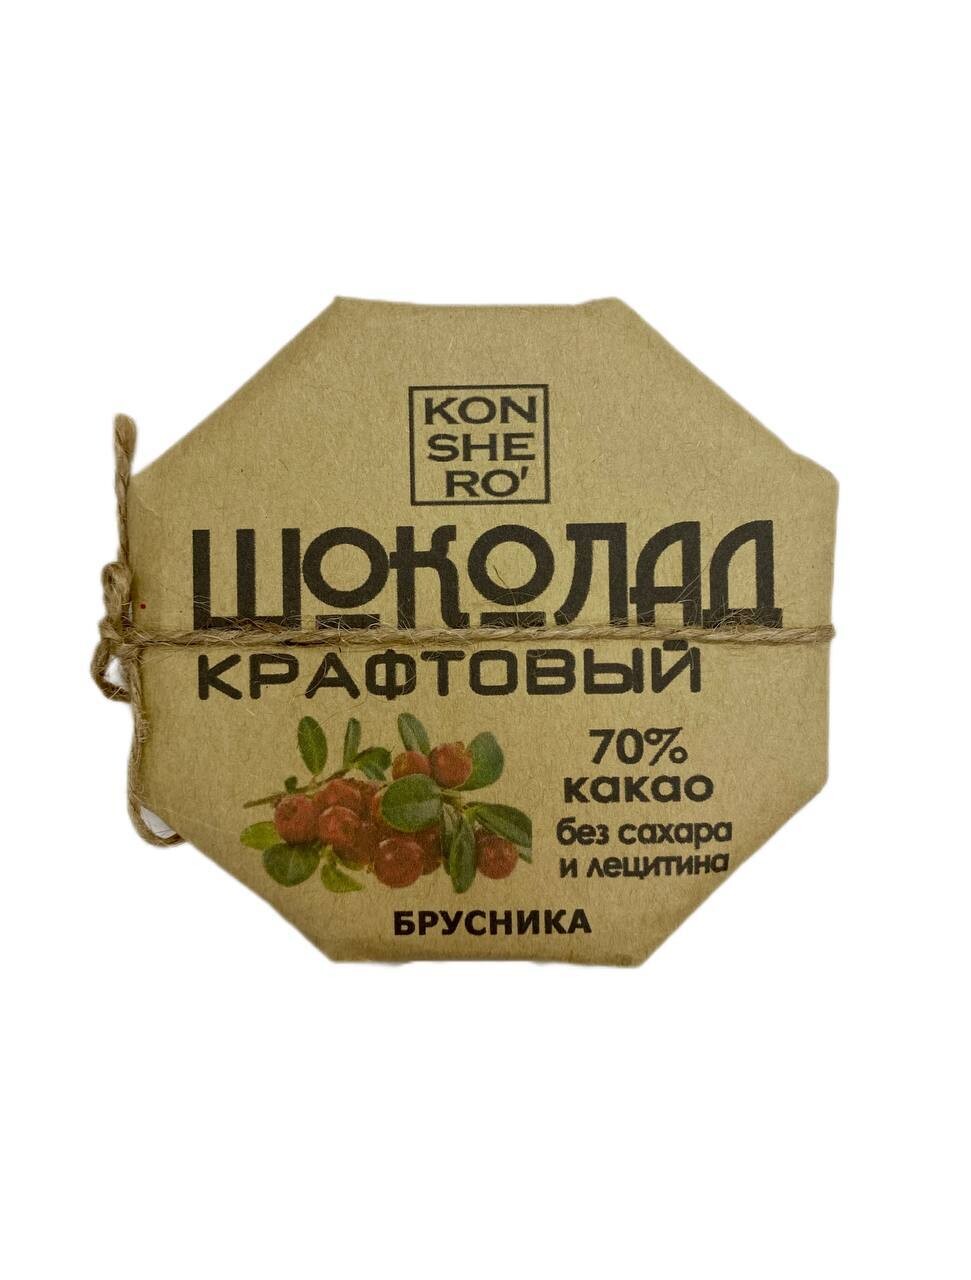 Шоколад на меду с брусникой, KONSHERO, 50 г